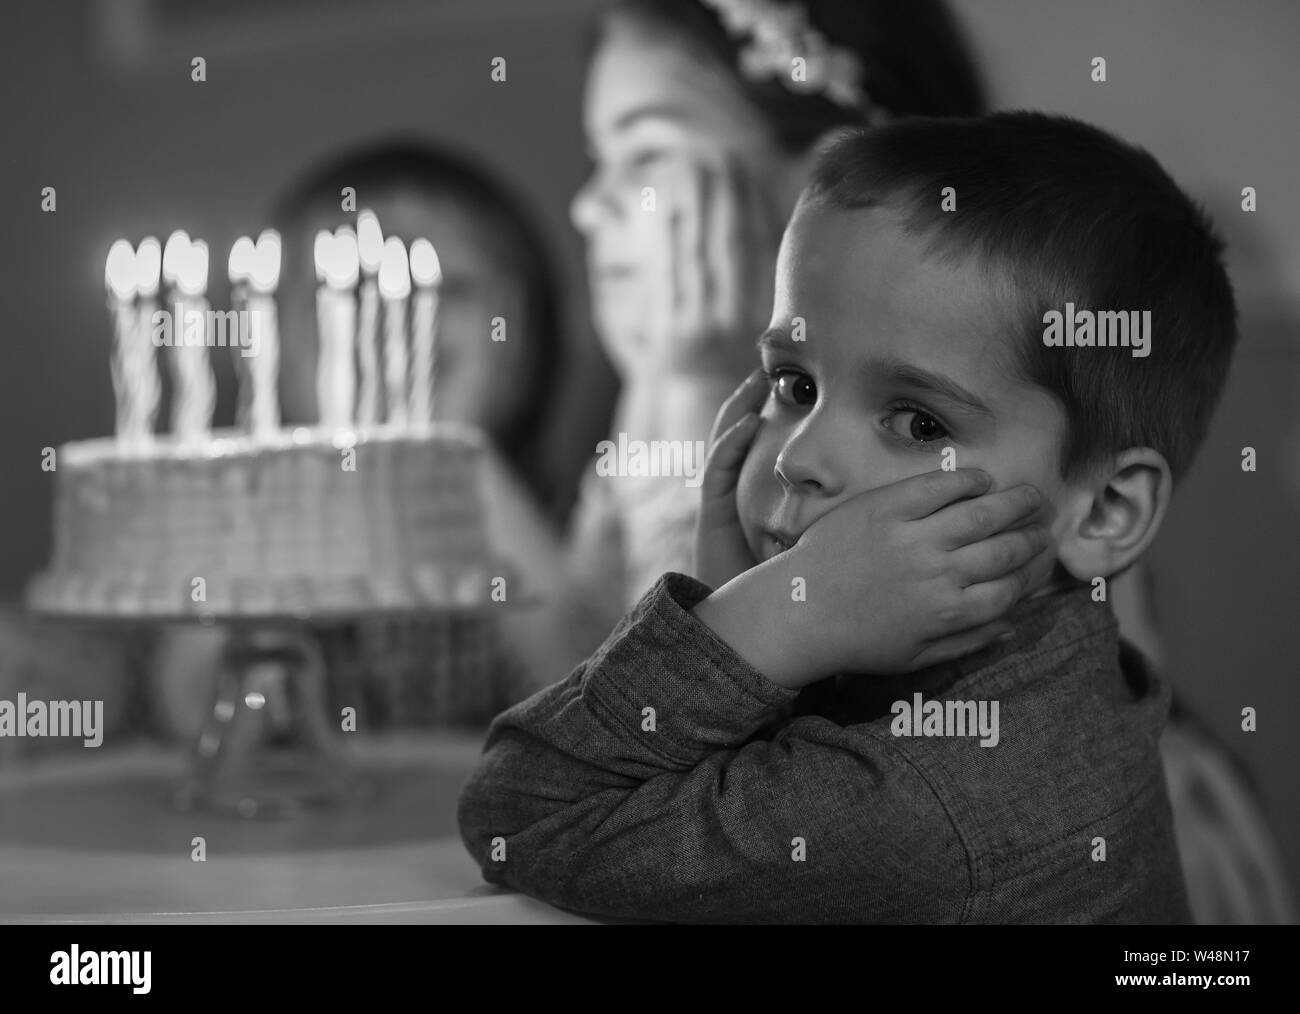 Children's birthday. Children near a birthday cake with candles Stock Photo